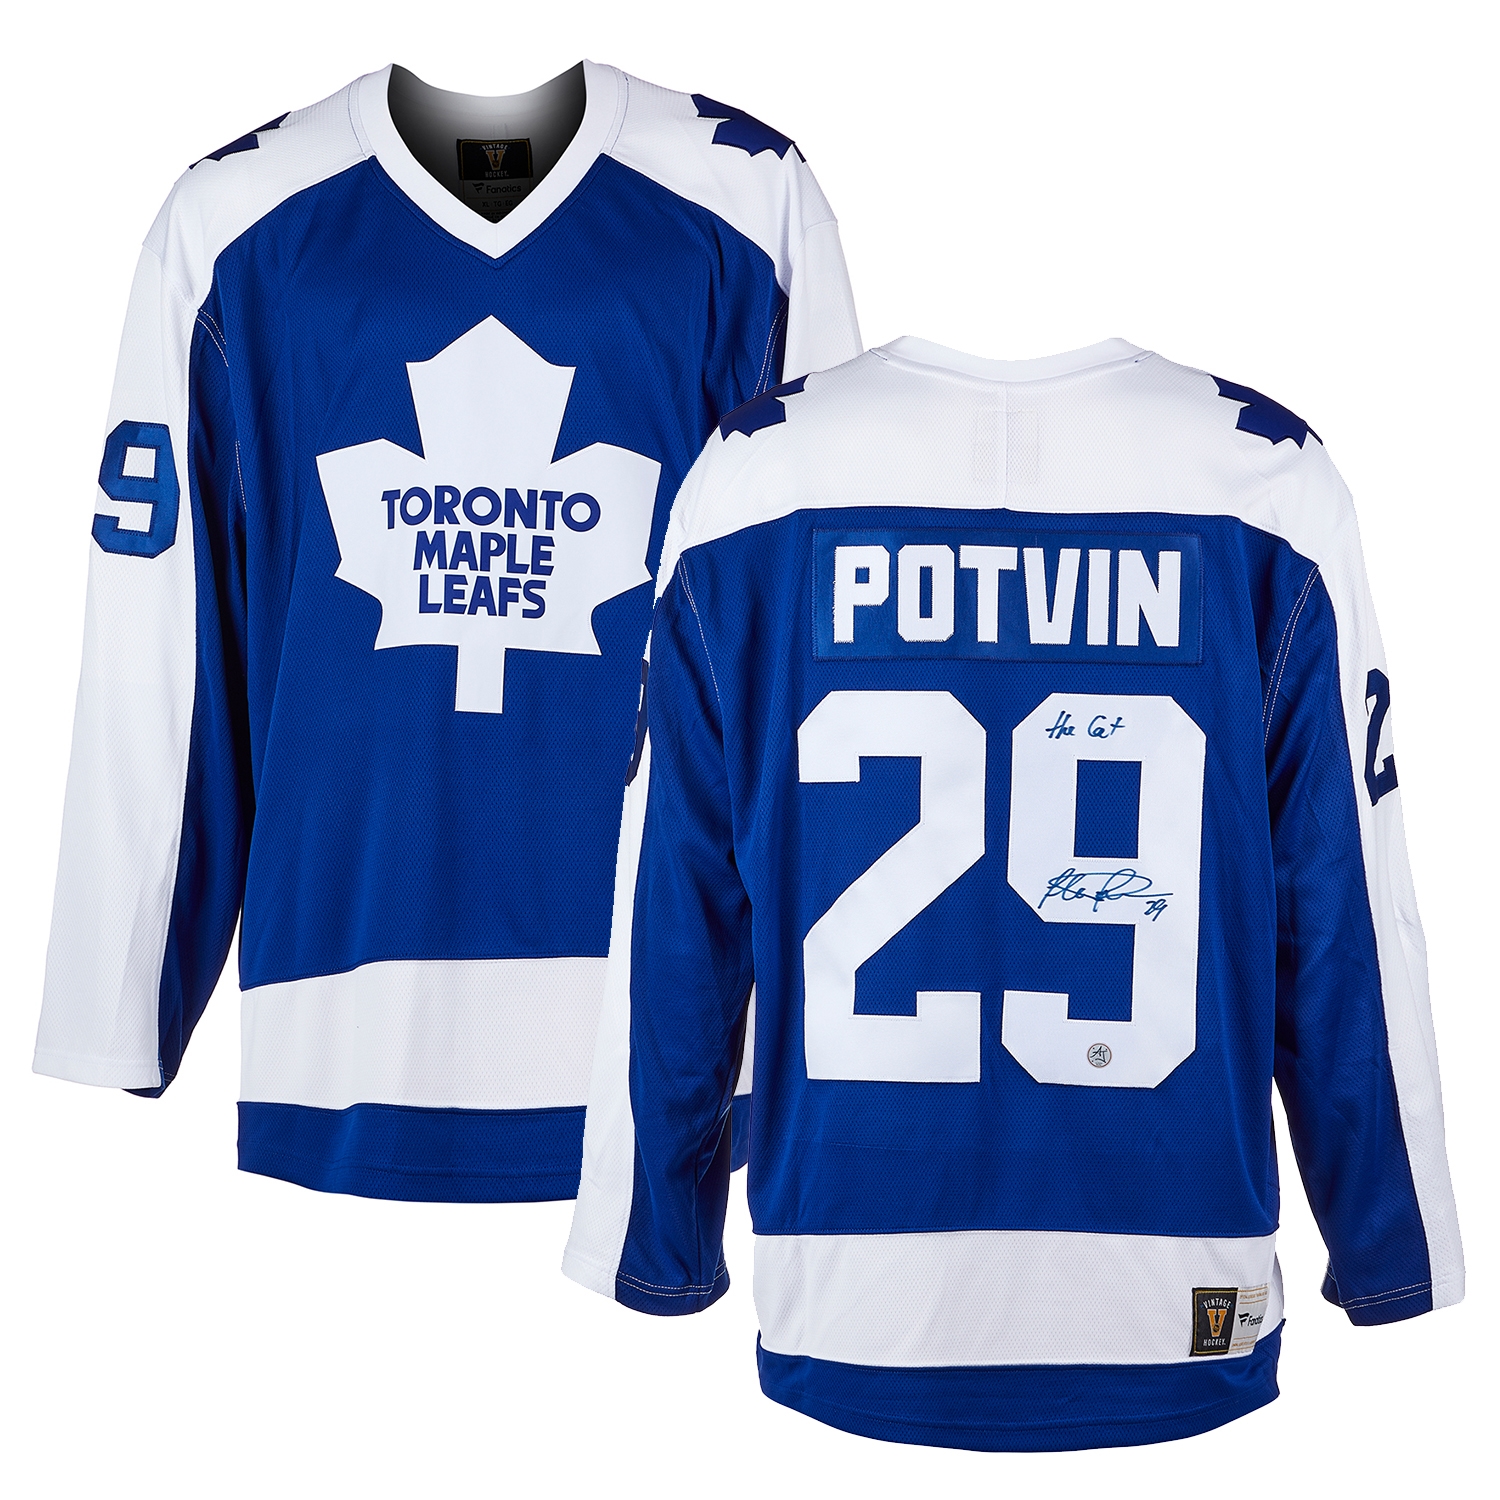 Felix Potvin Signed Toronto Maple Leafs Retro Fanatics Jersey with Cat Note